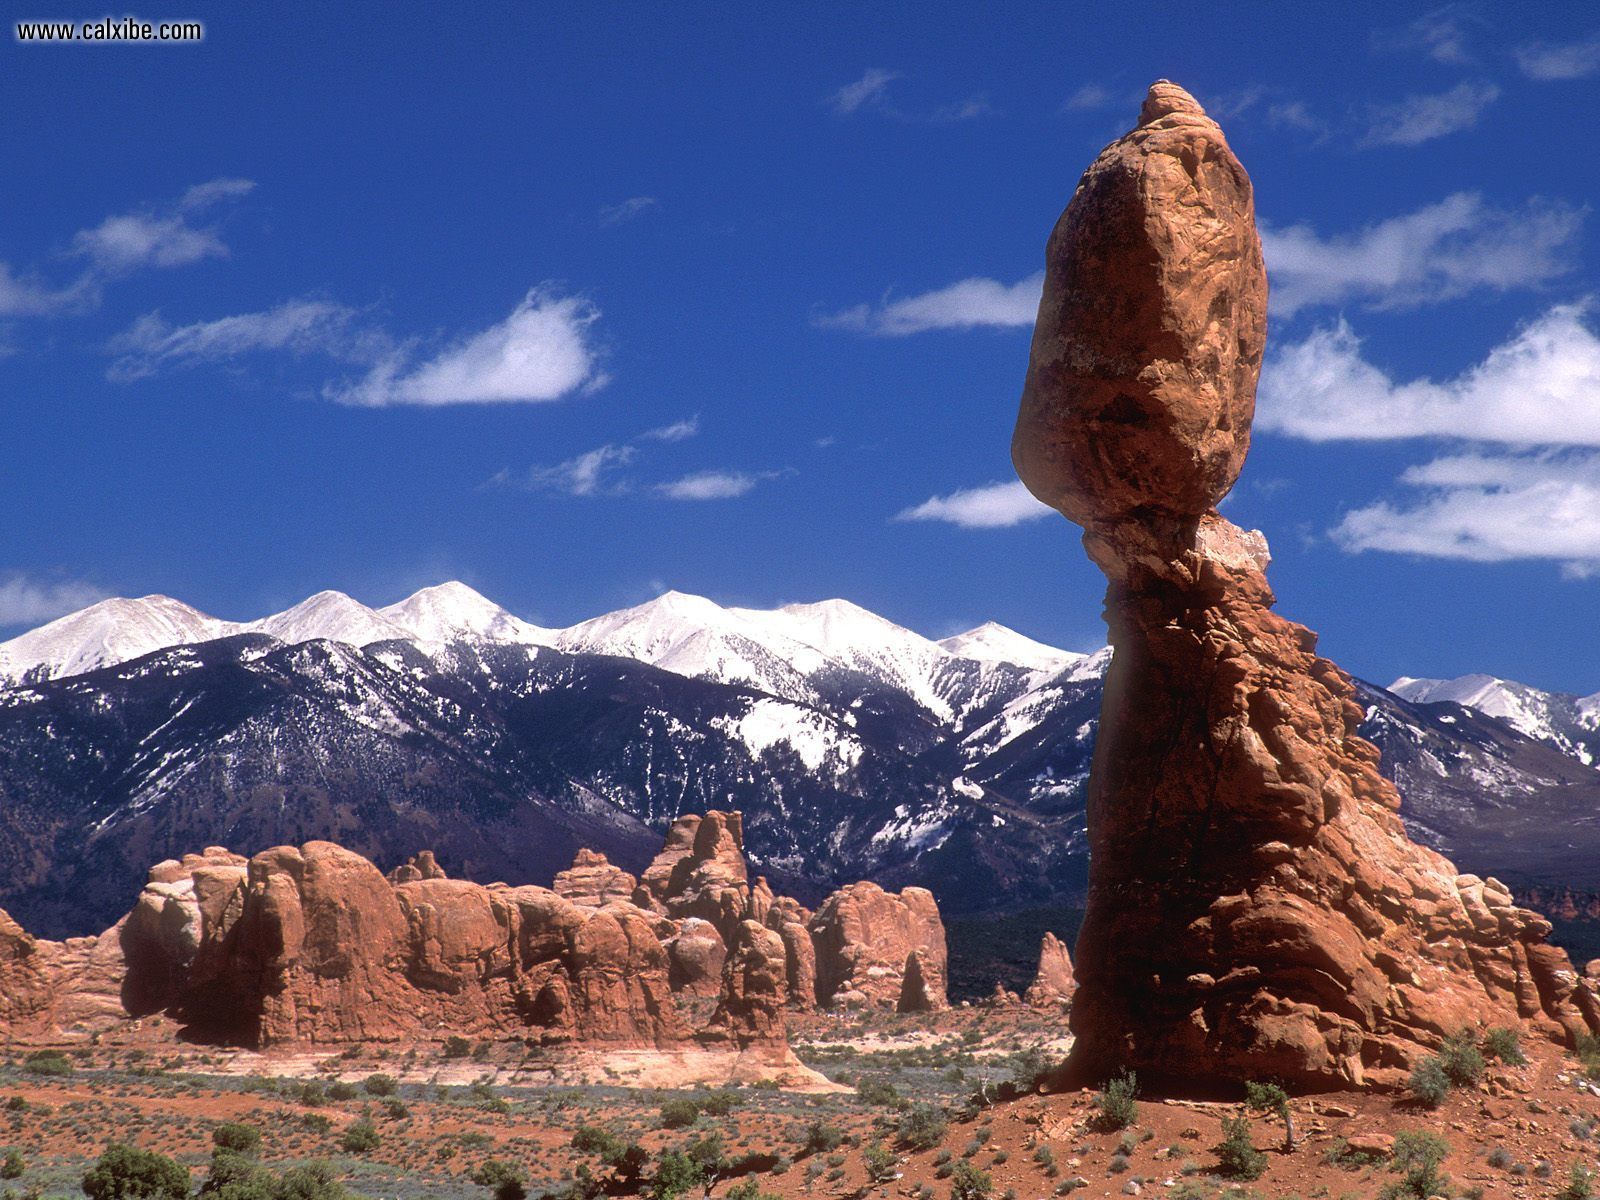 Nature Balance Rock Arches National Park Utah picture nr 17082